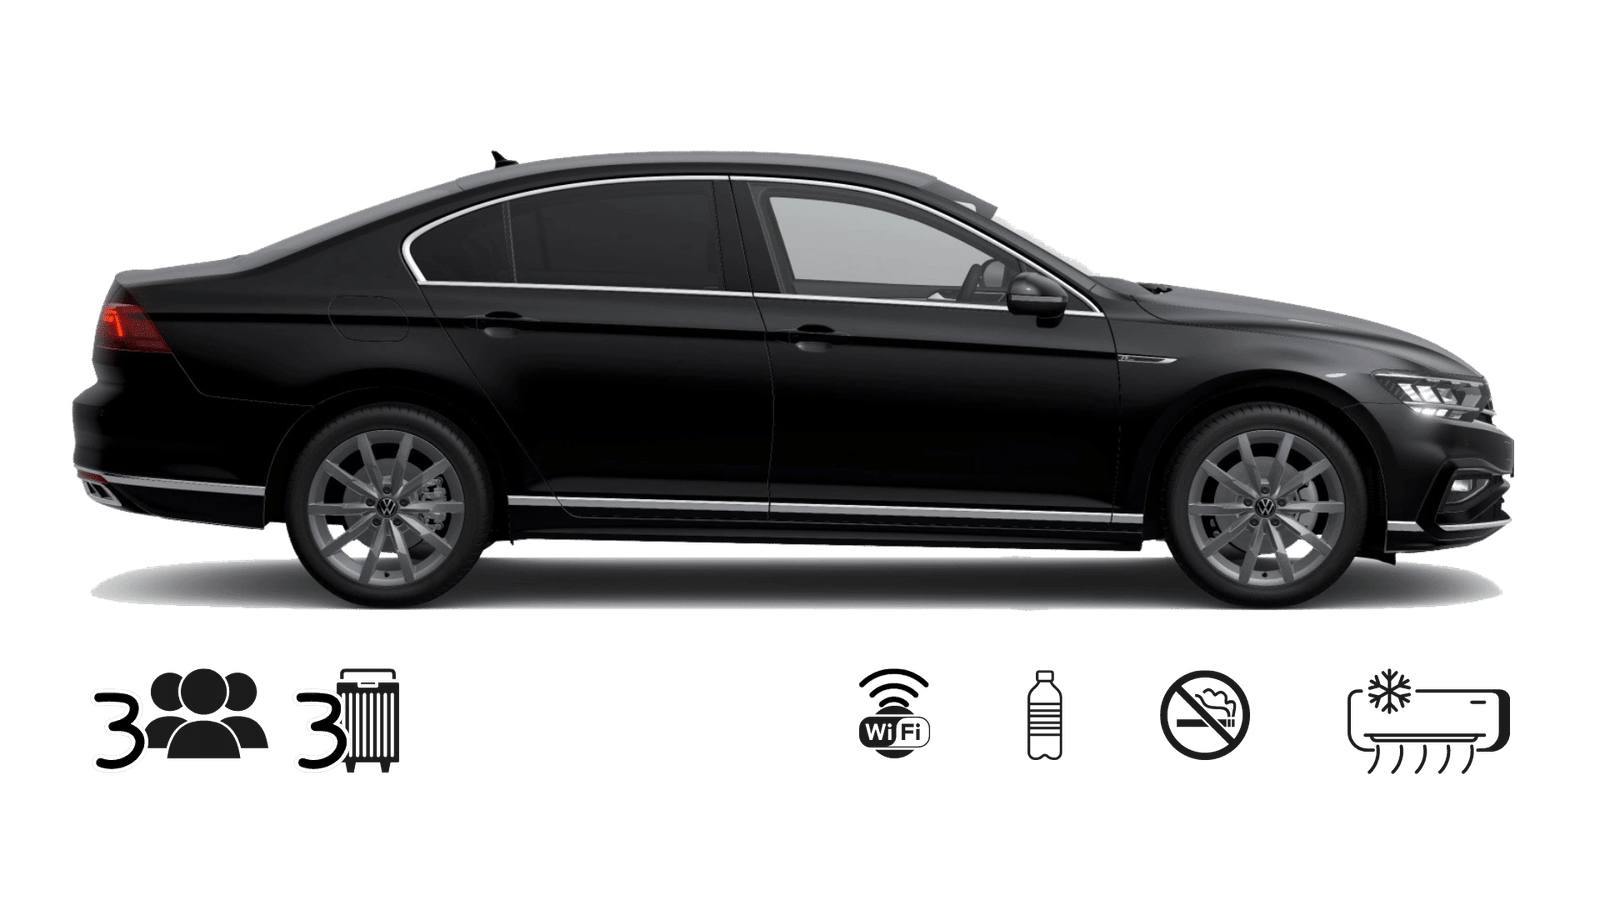 VW Passat and Škoda superb black limo